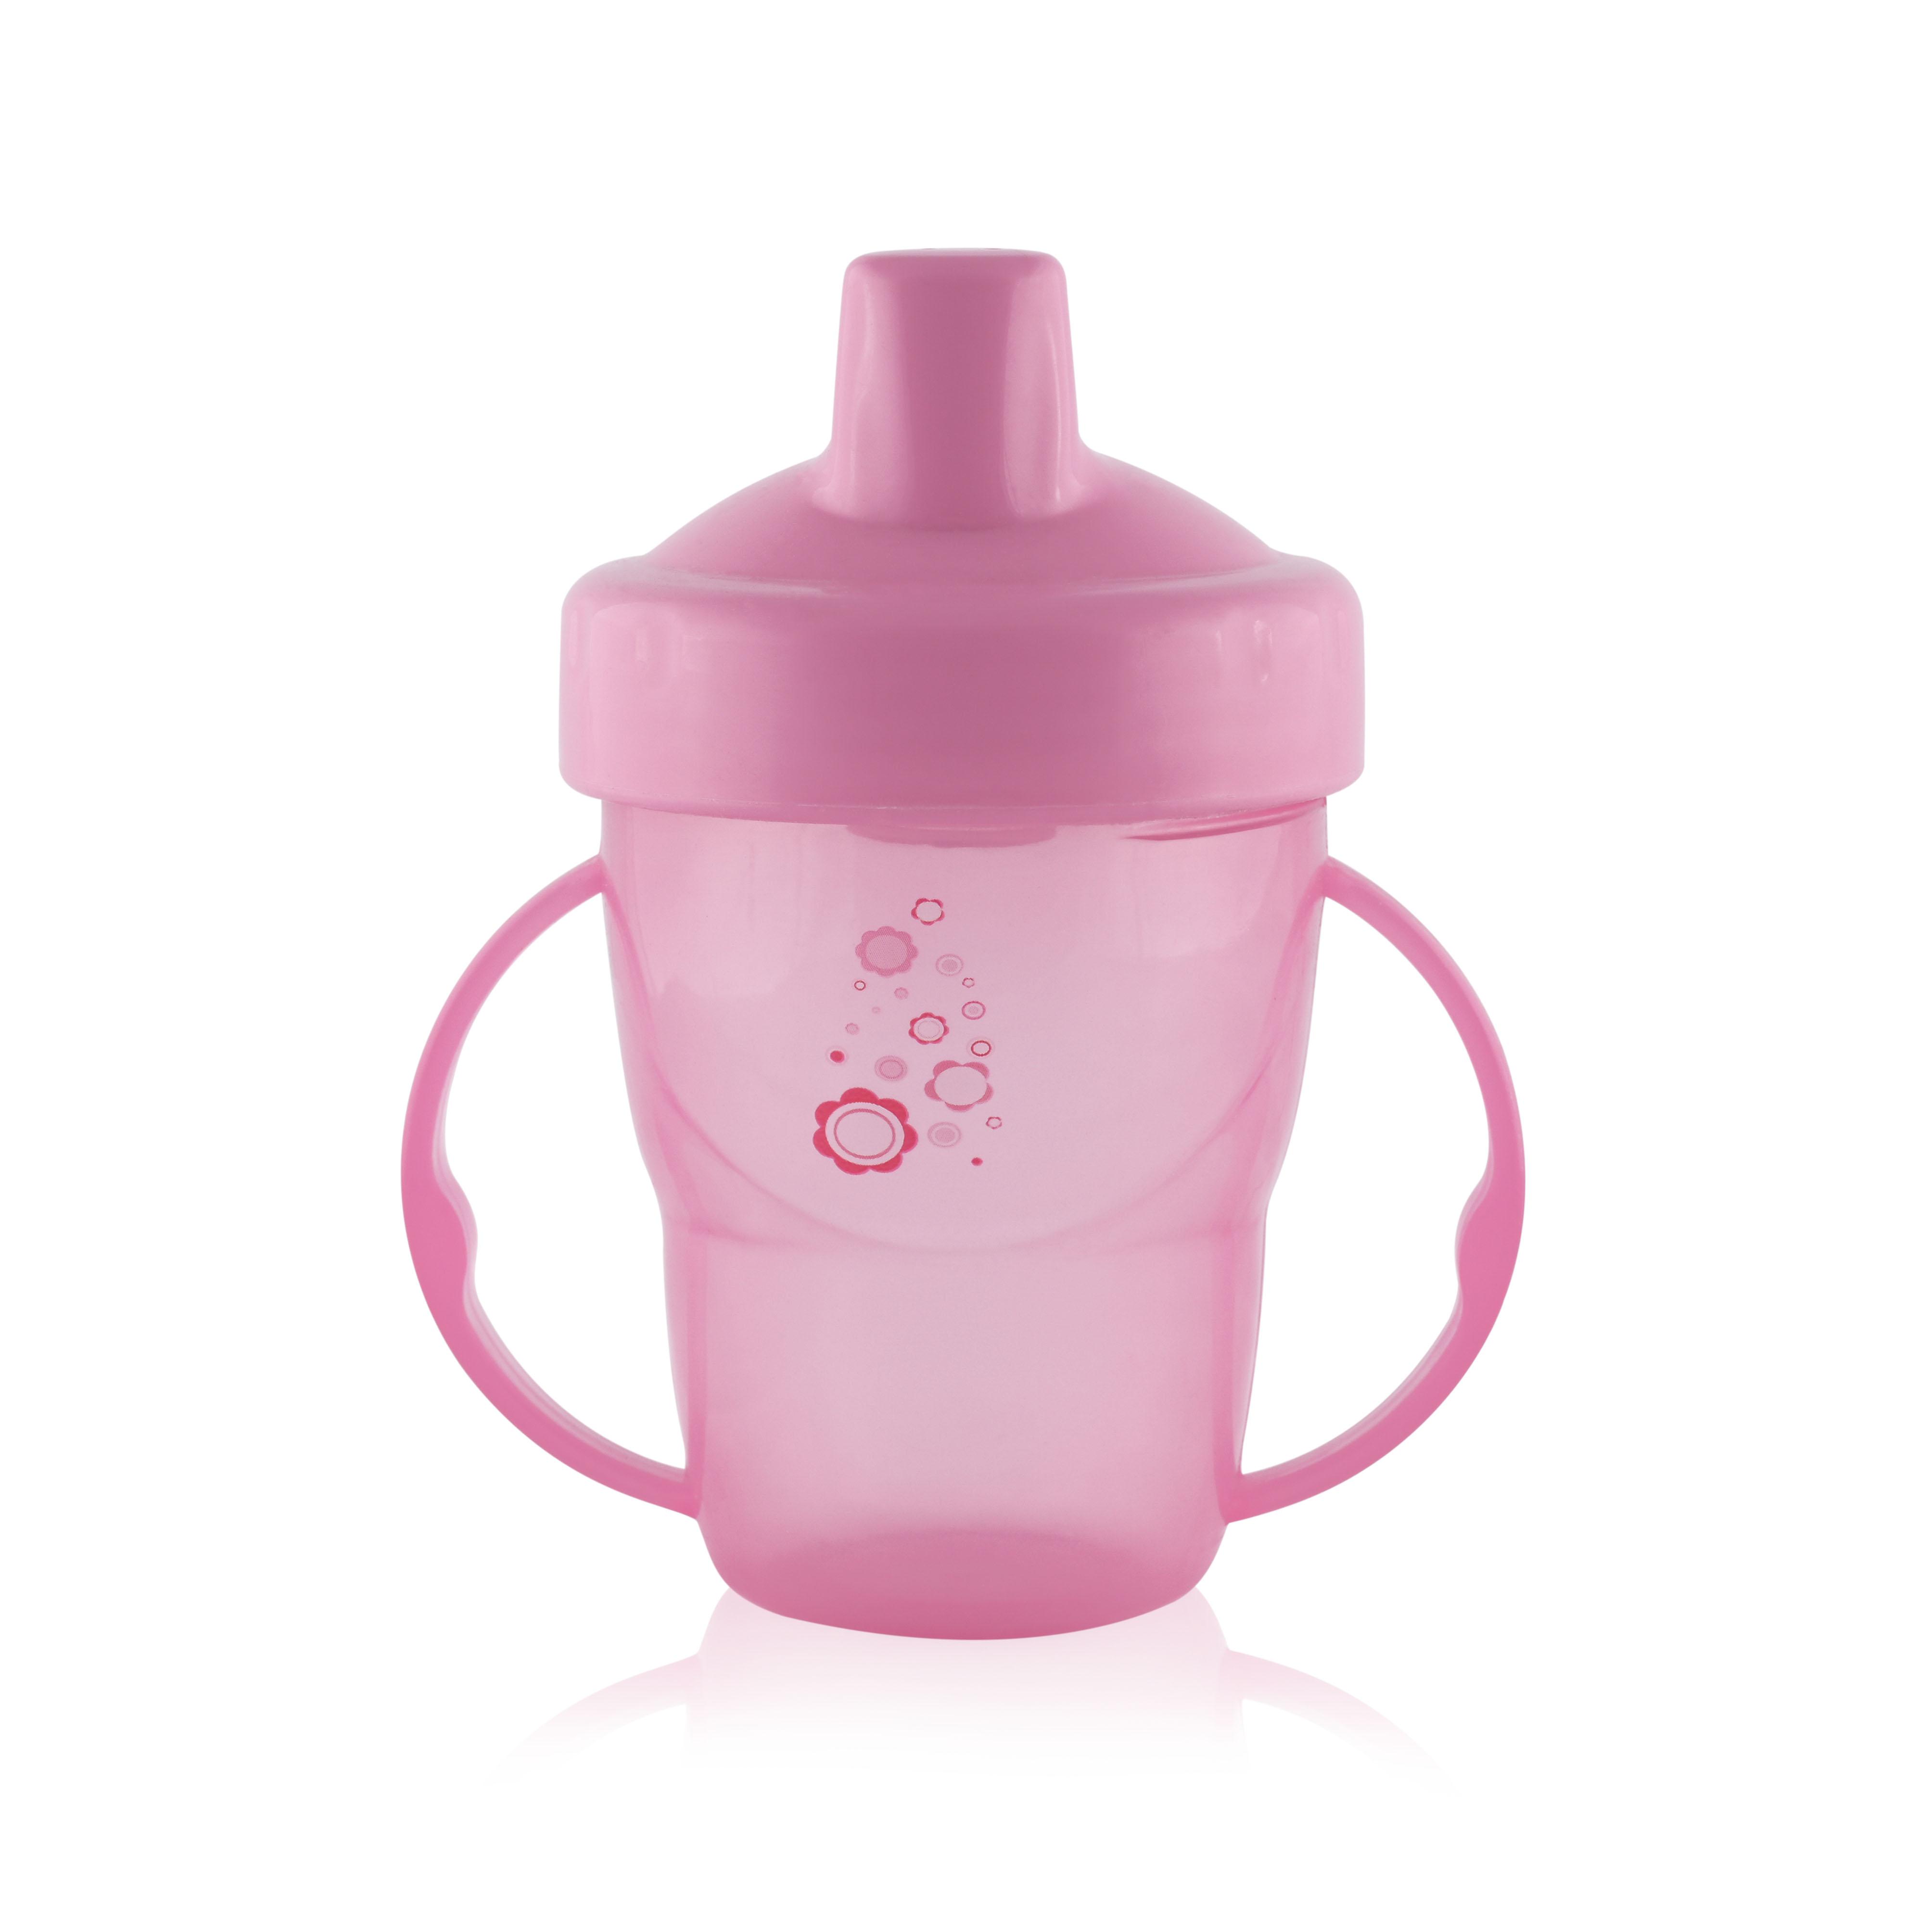 Cana apa bebe - Cana cu manere si cioc, 12 luni+, 210 ml, Pink, bebelorelli.ro